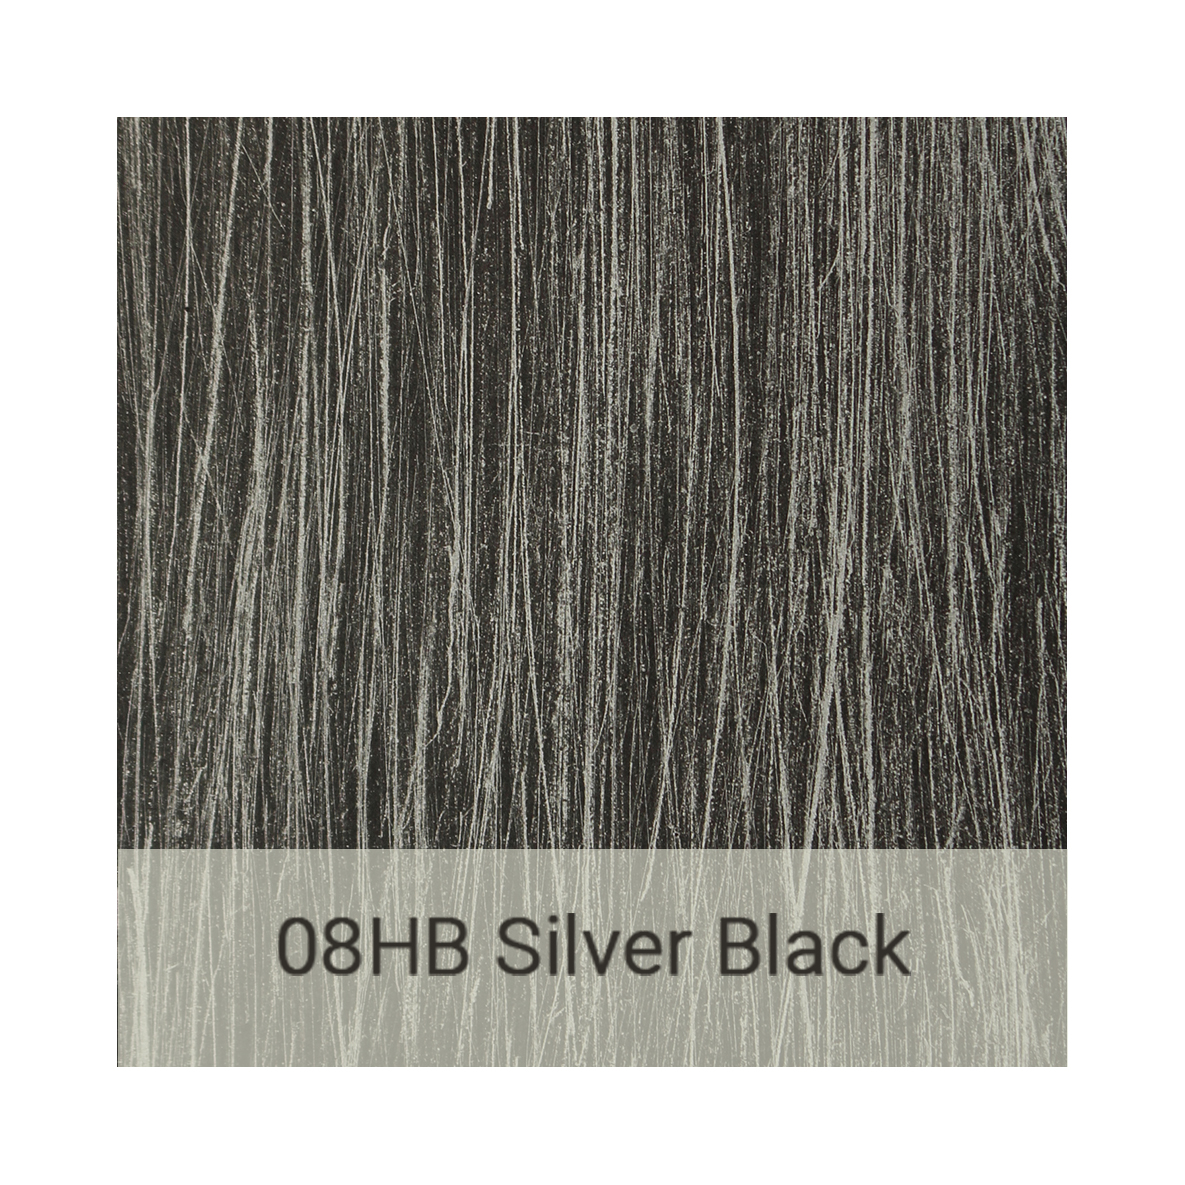 Kingston Casual handbrushed-08hb-silver-black